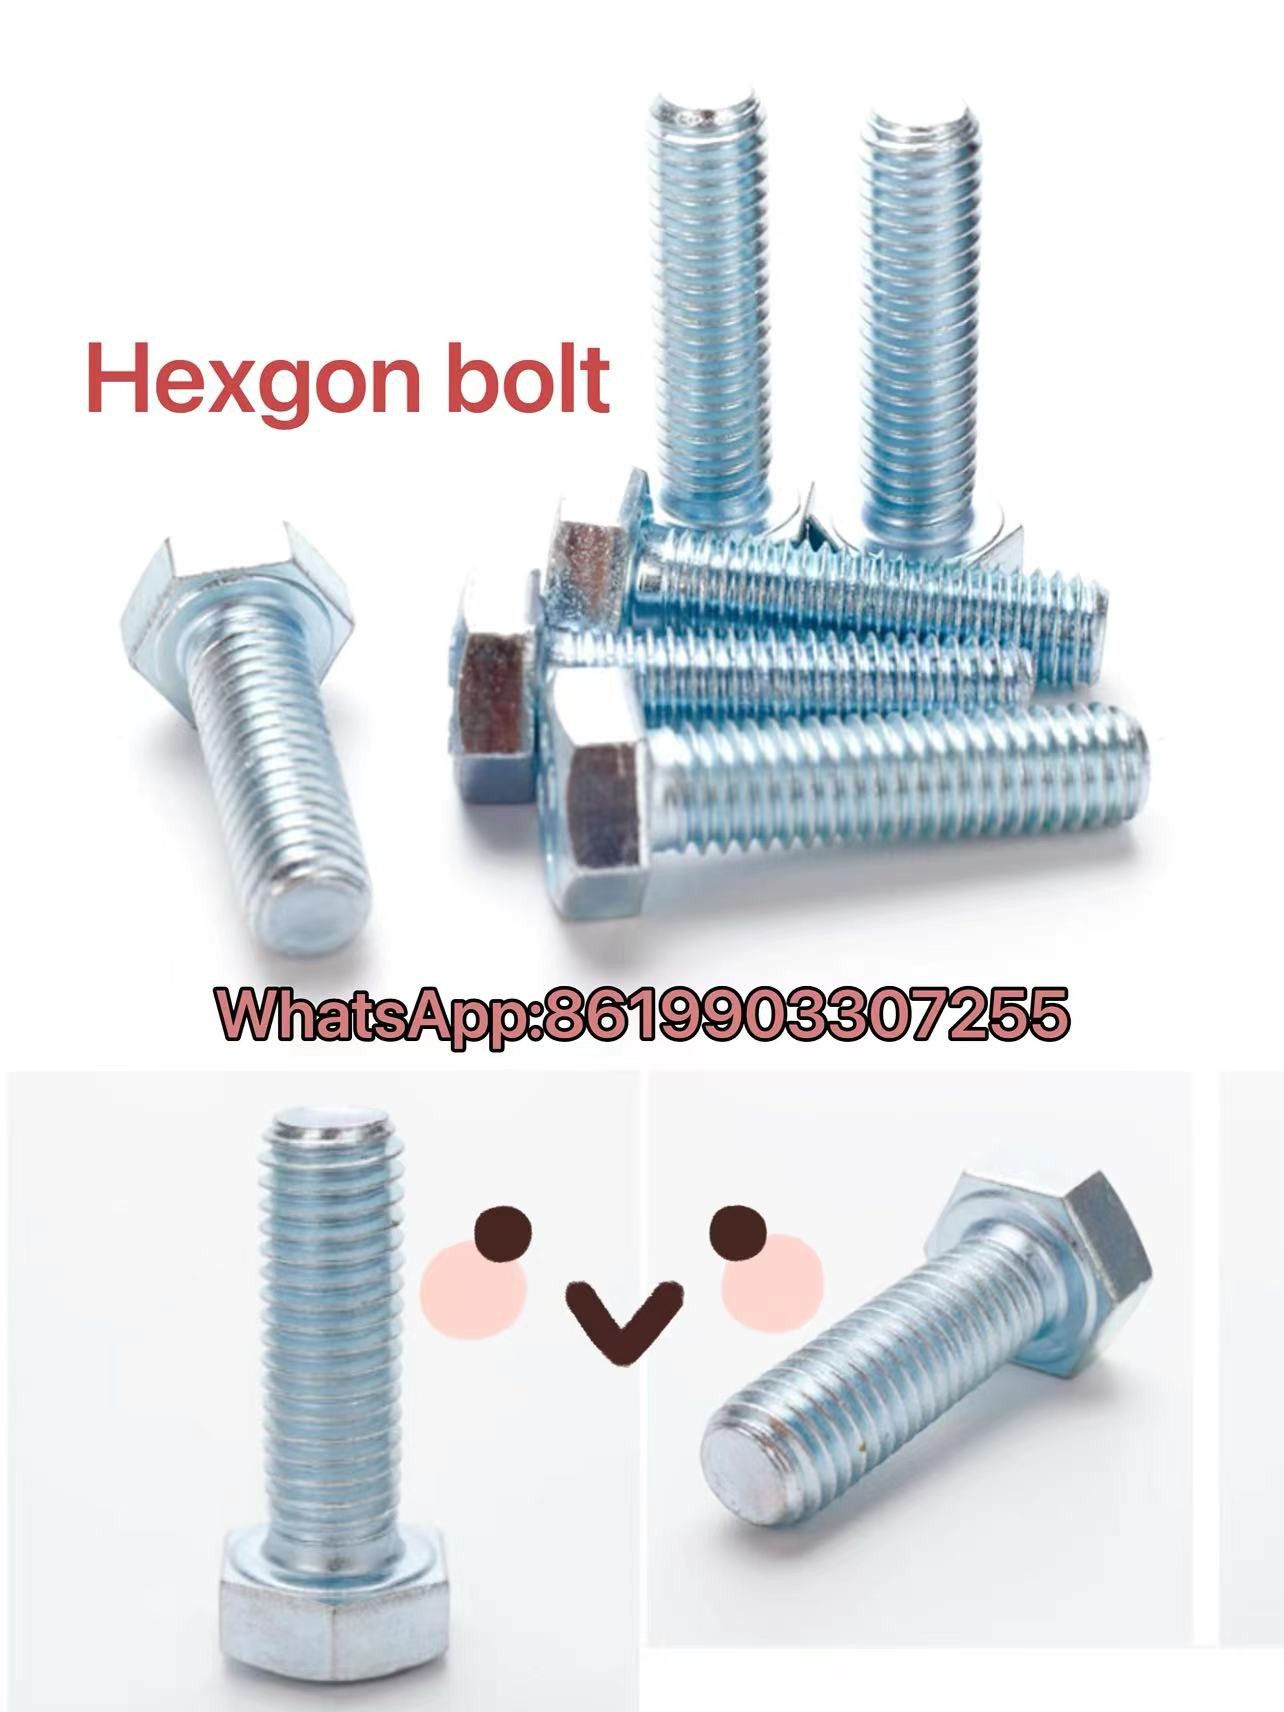 factory sales hexgon bolt WhatsApp:8619903307255-pic_1